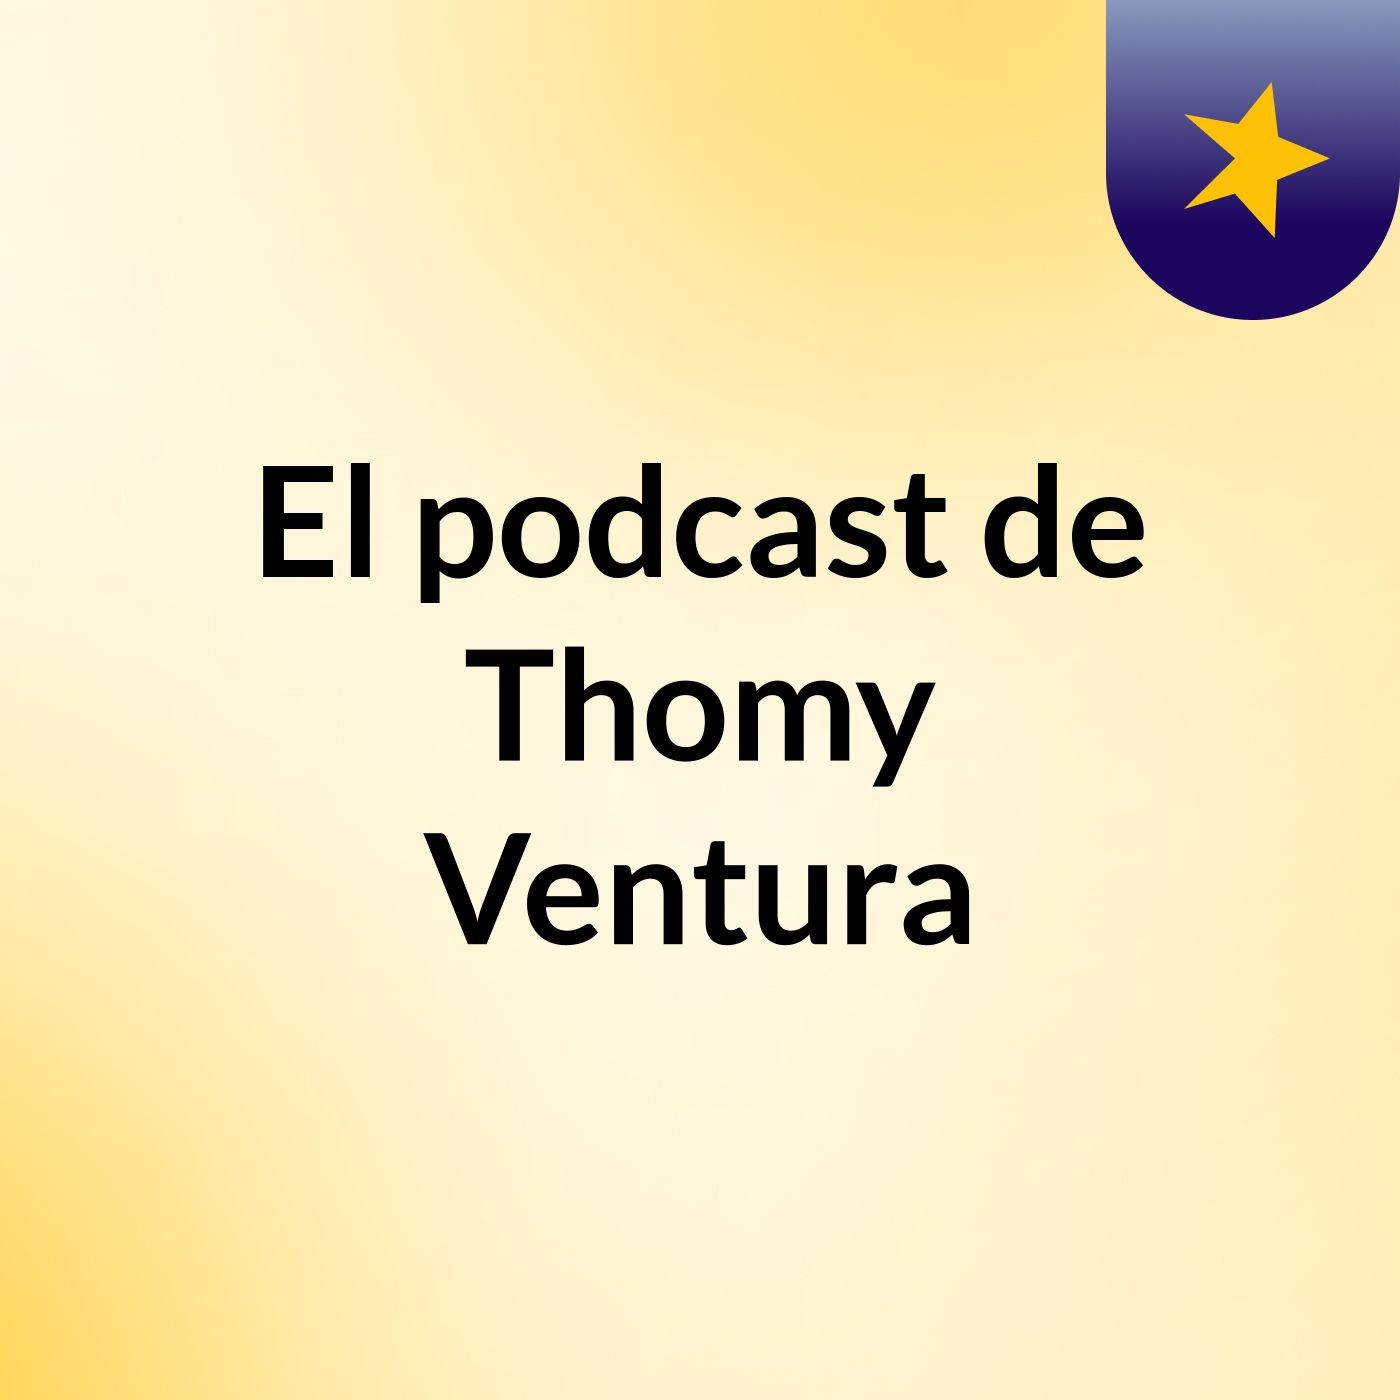 El podcast de Thomy Ventura